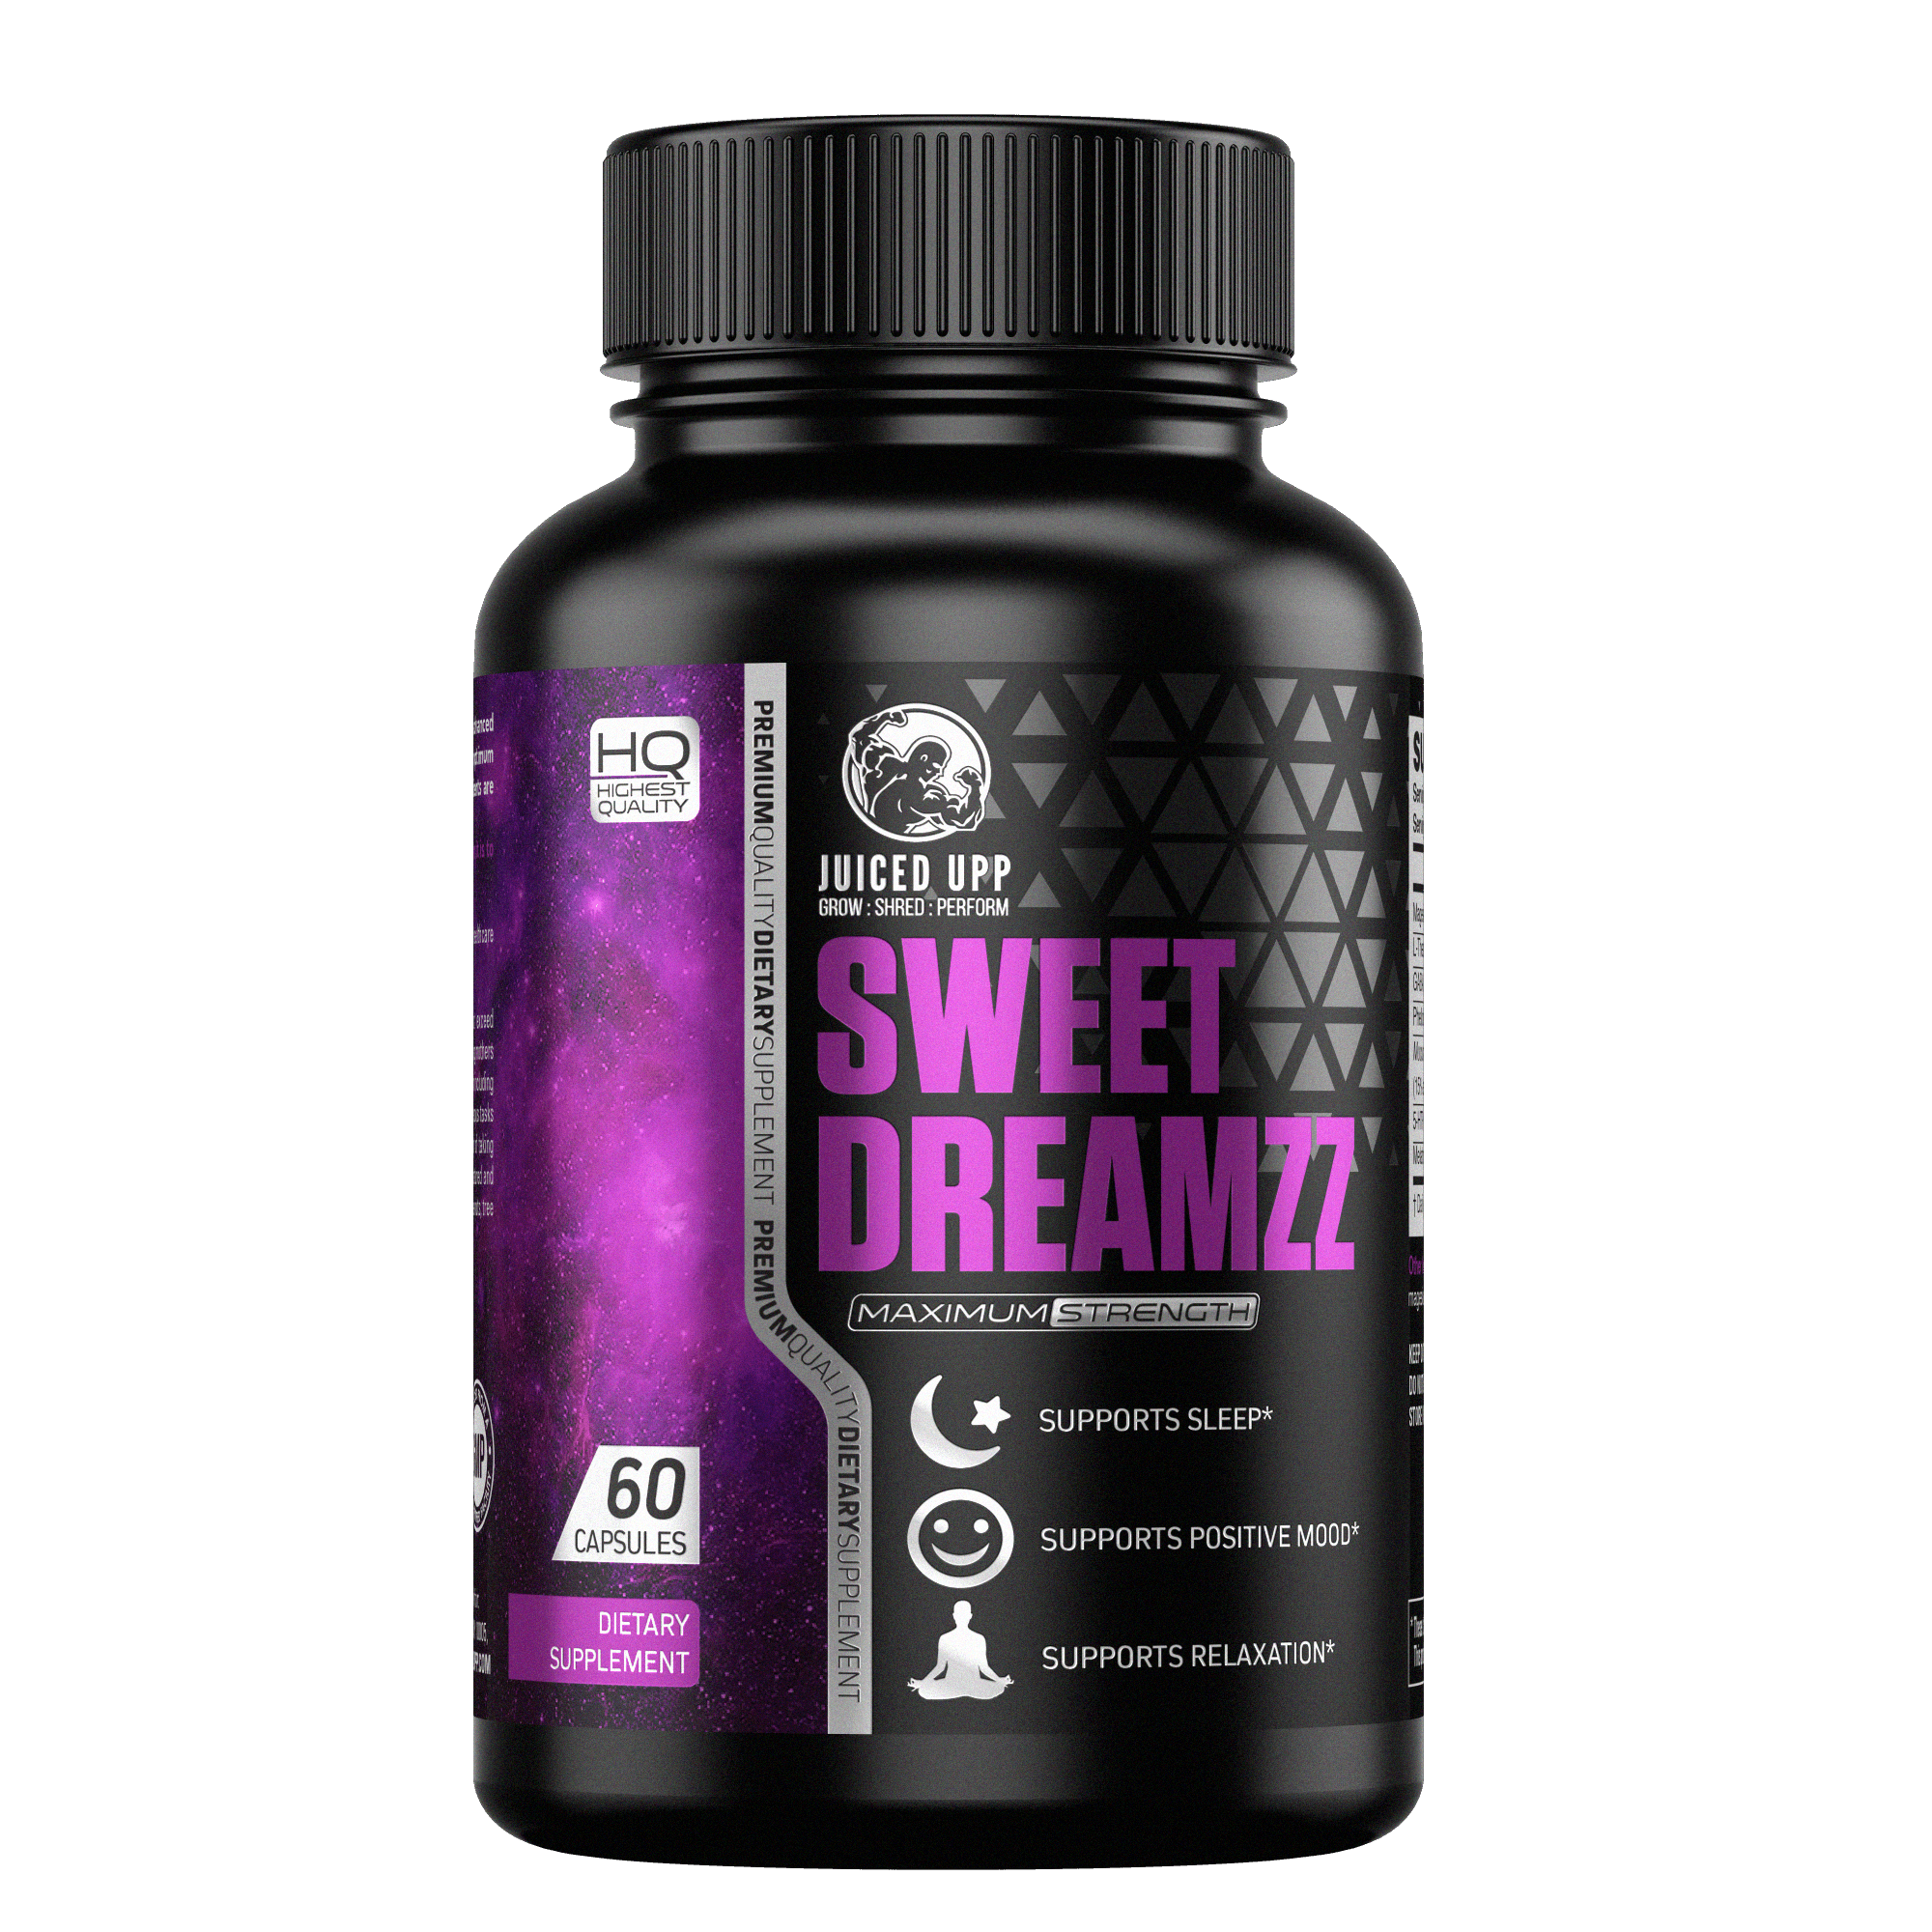 SWEET DREAMZZ – STRESS RELIEF , RELAXATION & BETTER SLEEP